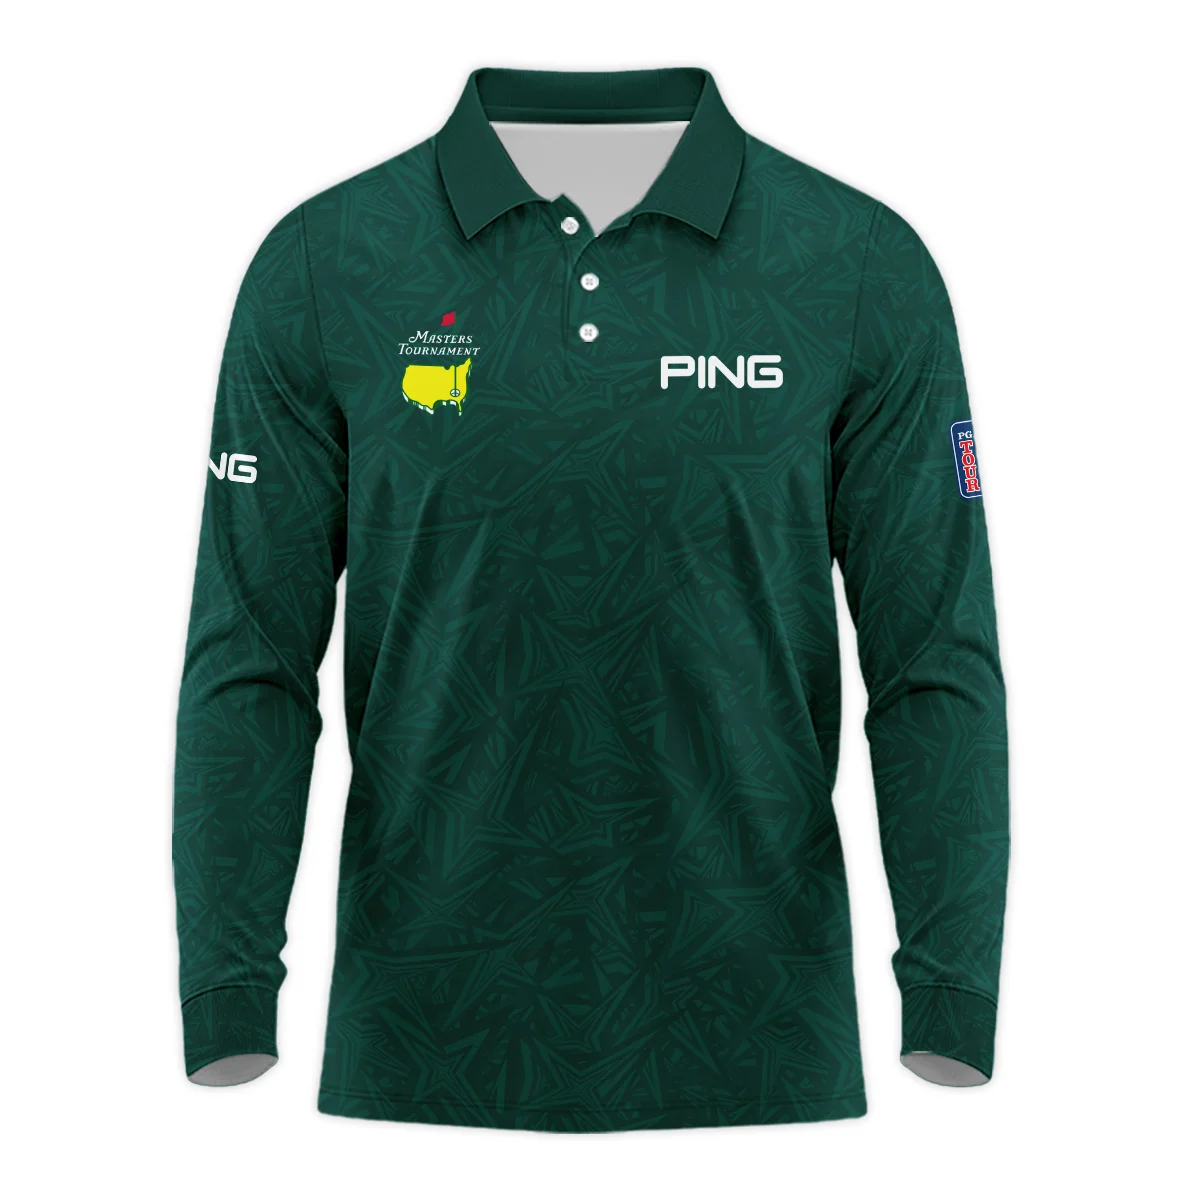 Stars Dark Green Abstract Sport Masters Tournament Ping Zipper Hoodie Shirt Style Classic Zipper Hoodie Shirt